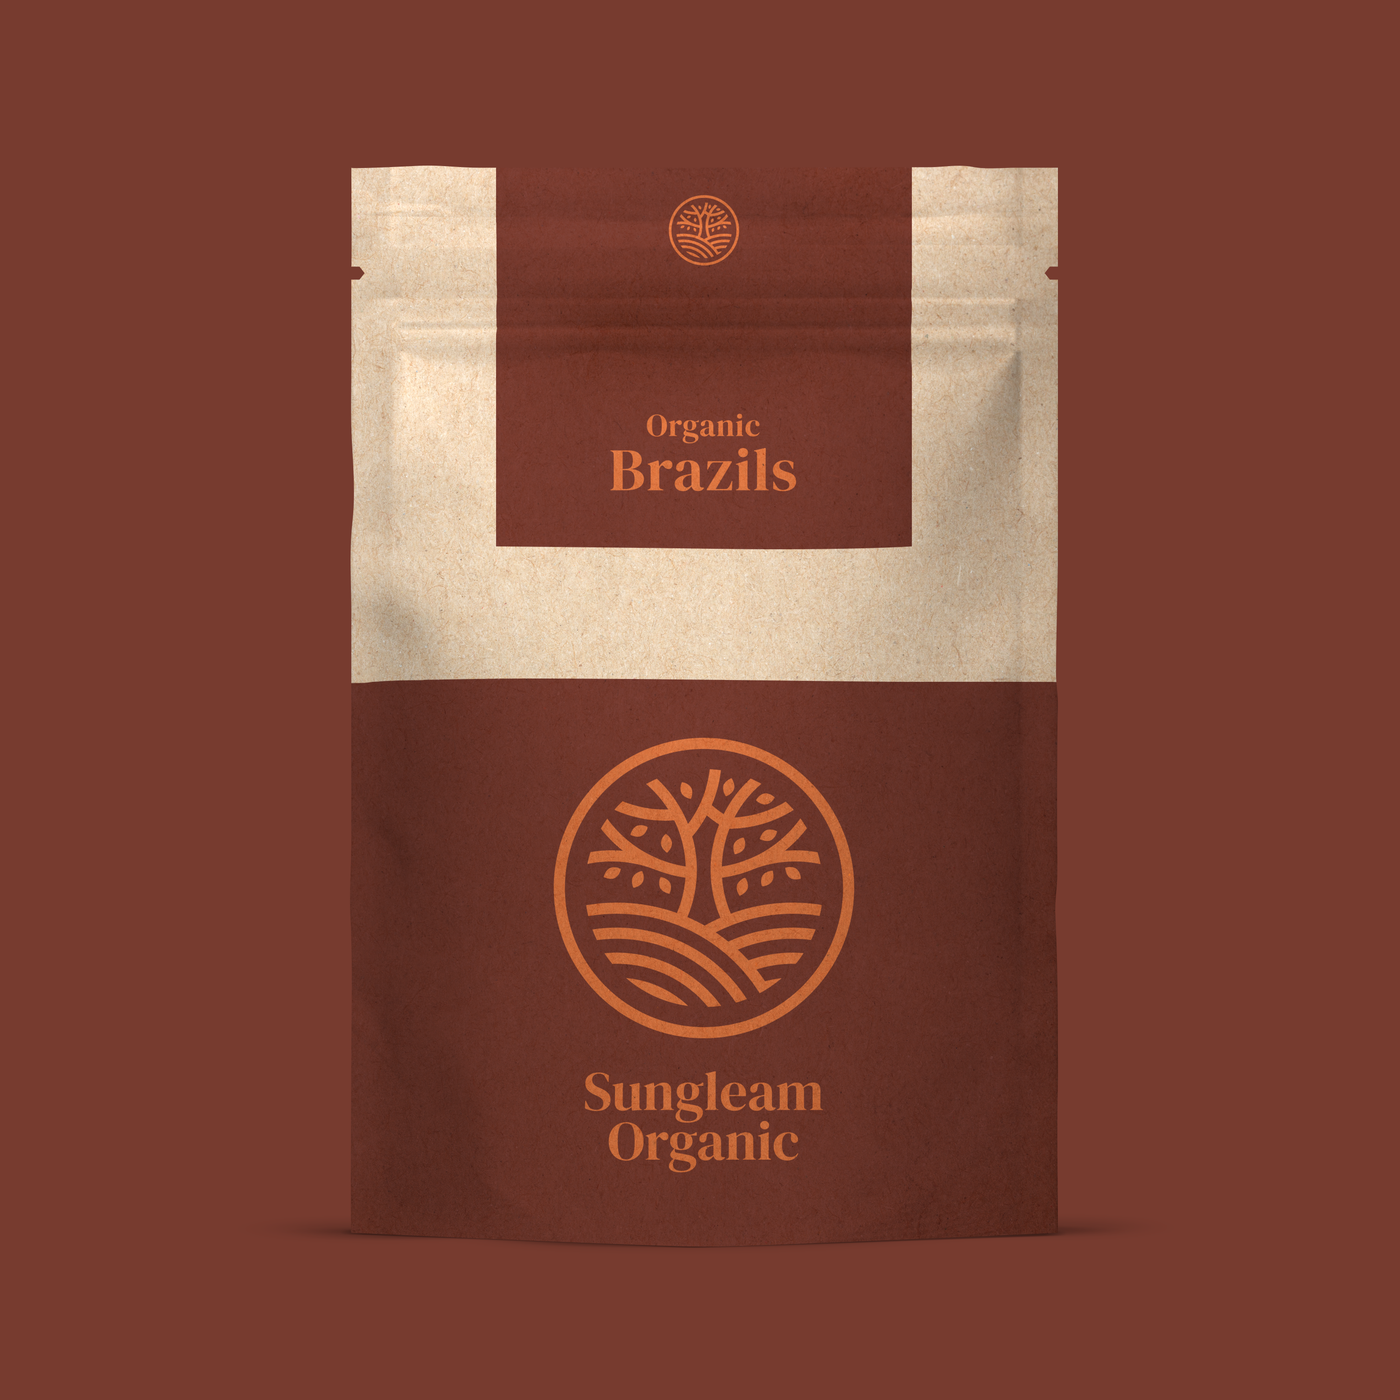 Sungleam Organic Brazil Nuts product